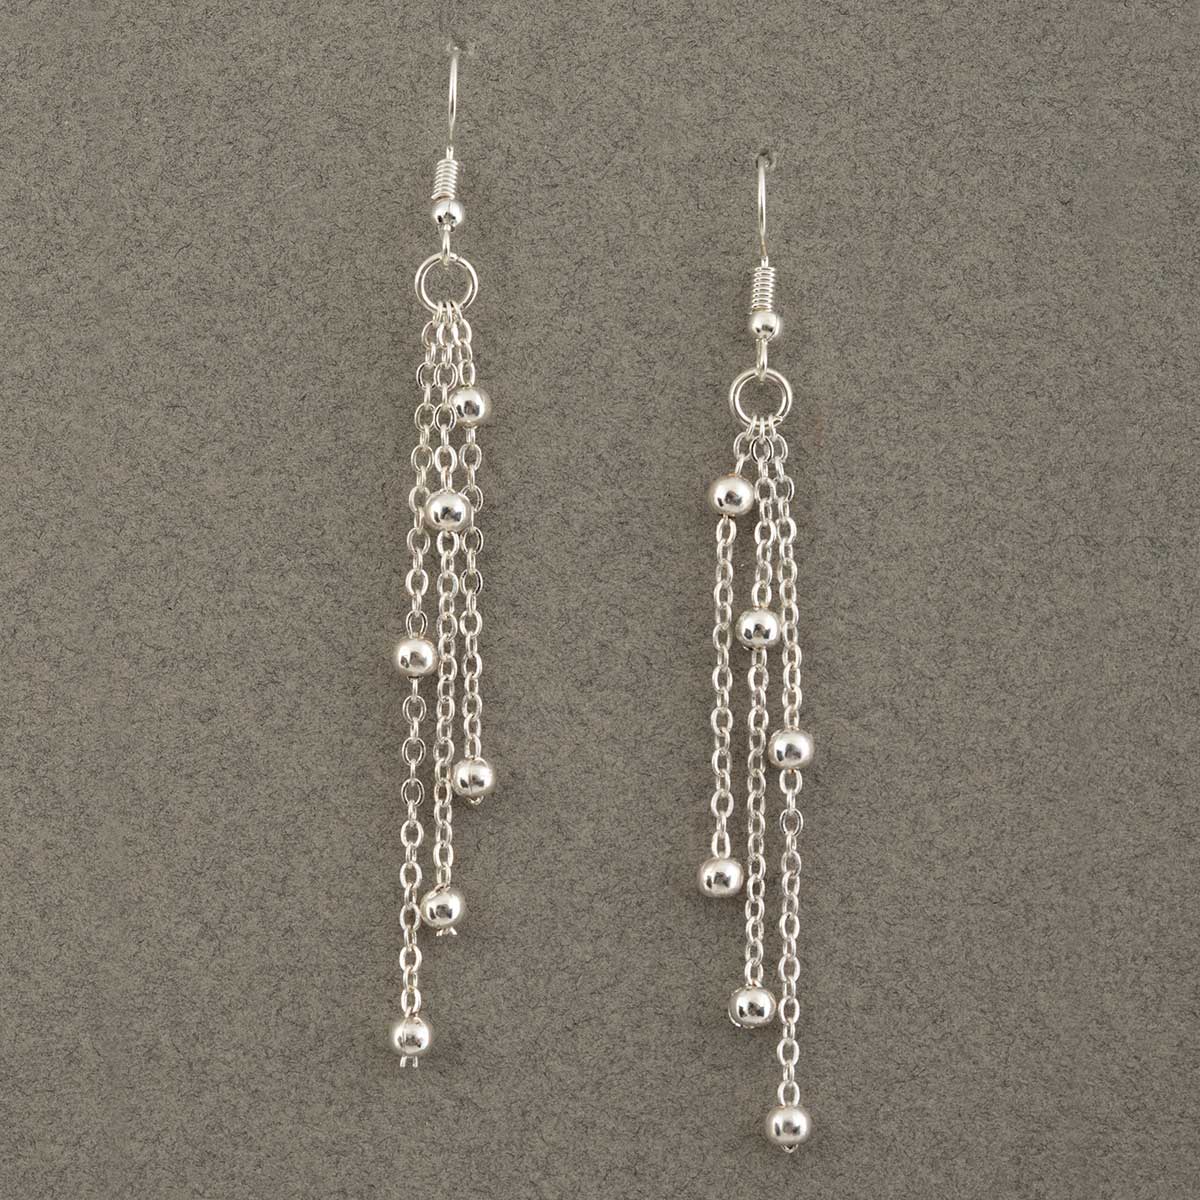 Silver Multi Strand Chain Dangle Earrings with Mini Balls .25"x3